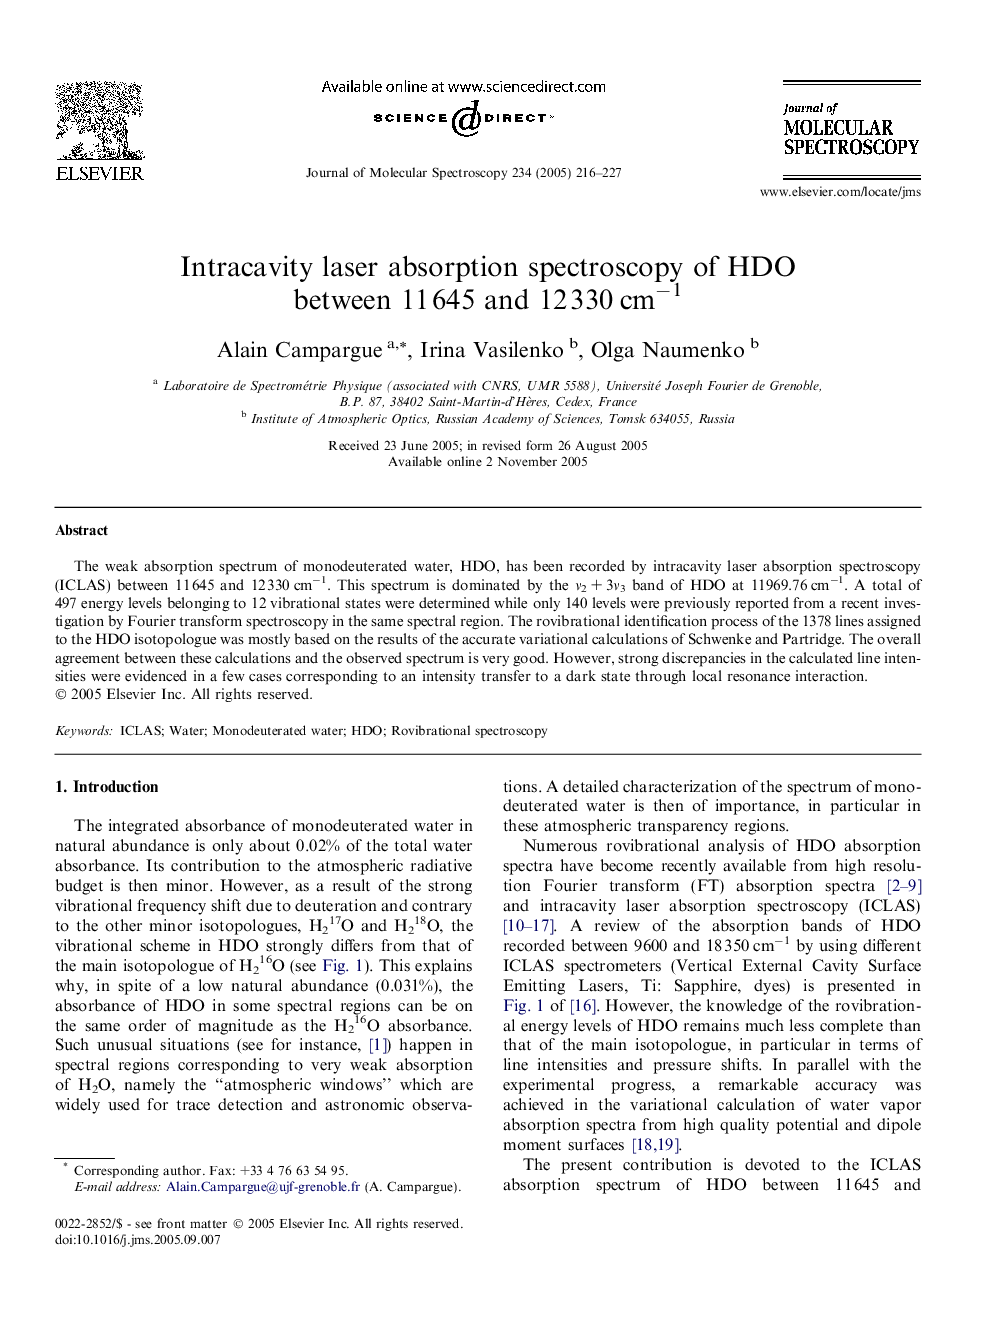 Intracavity laser absorption spectroscopy of HDO between 11Â 645 and 12Â 330Â cmâ1